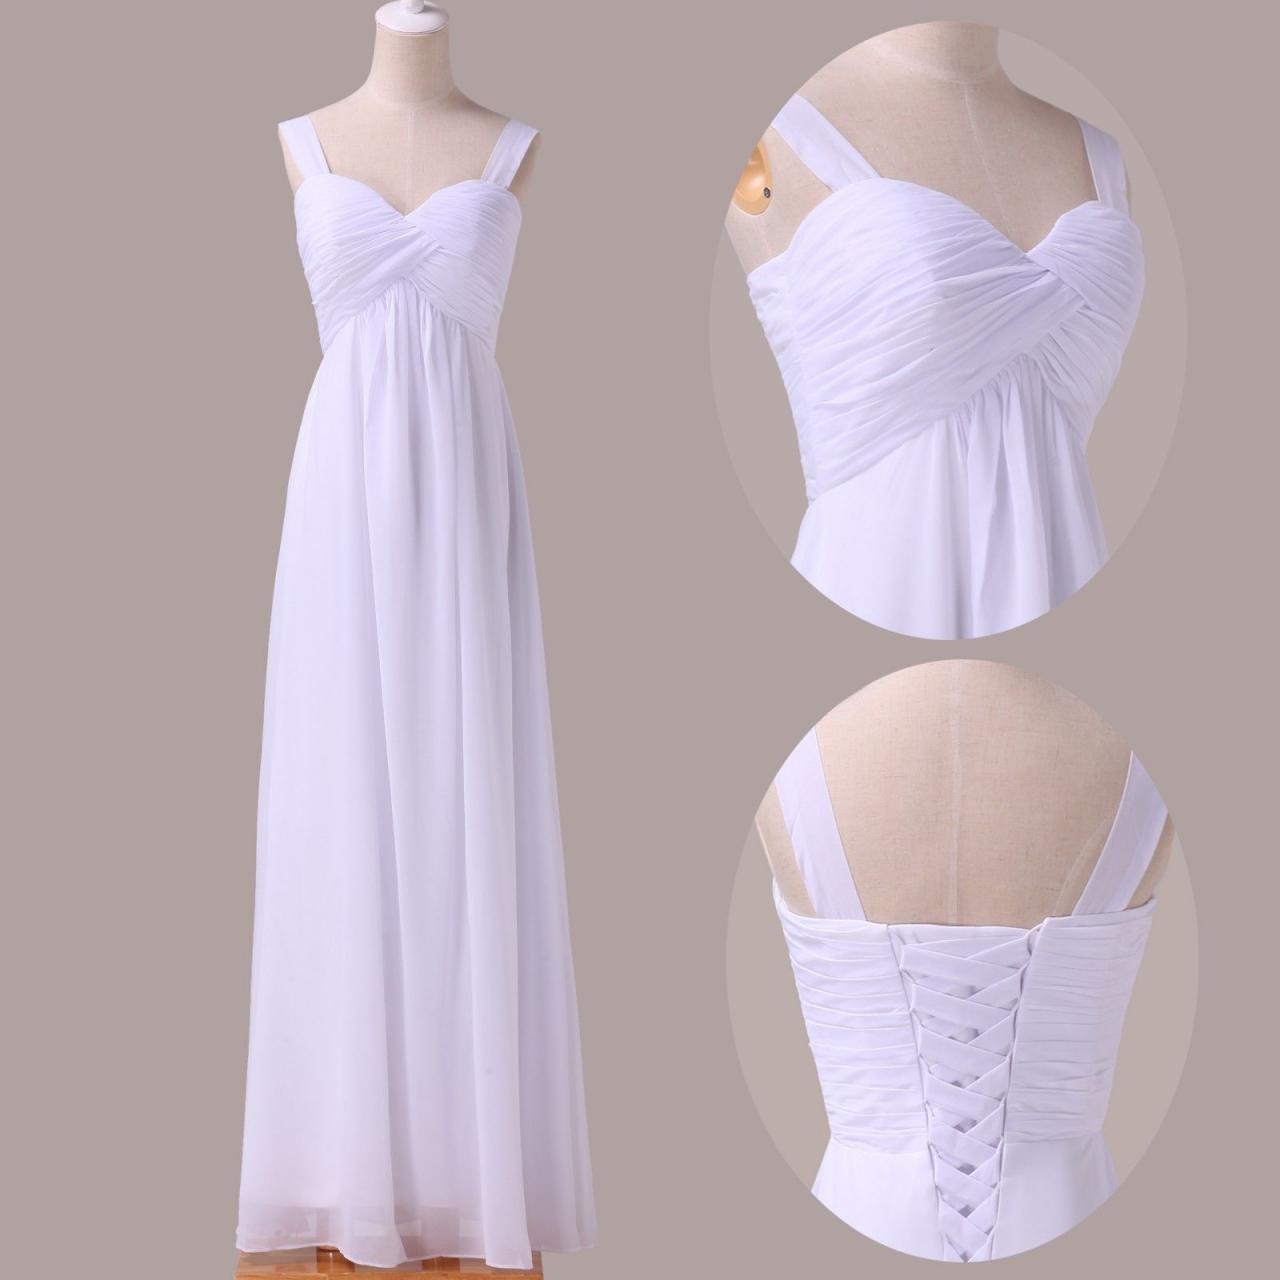 Spaghetti Straps White Chiffon Bridesmaid Dress,floor Length A Line White Bridesmaid Dresses,elegant Long Prom Dresses Party Evening Gown